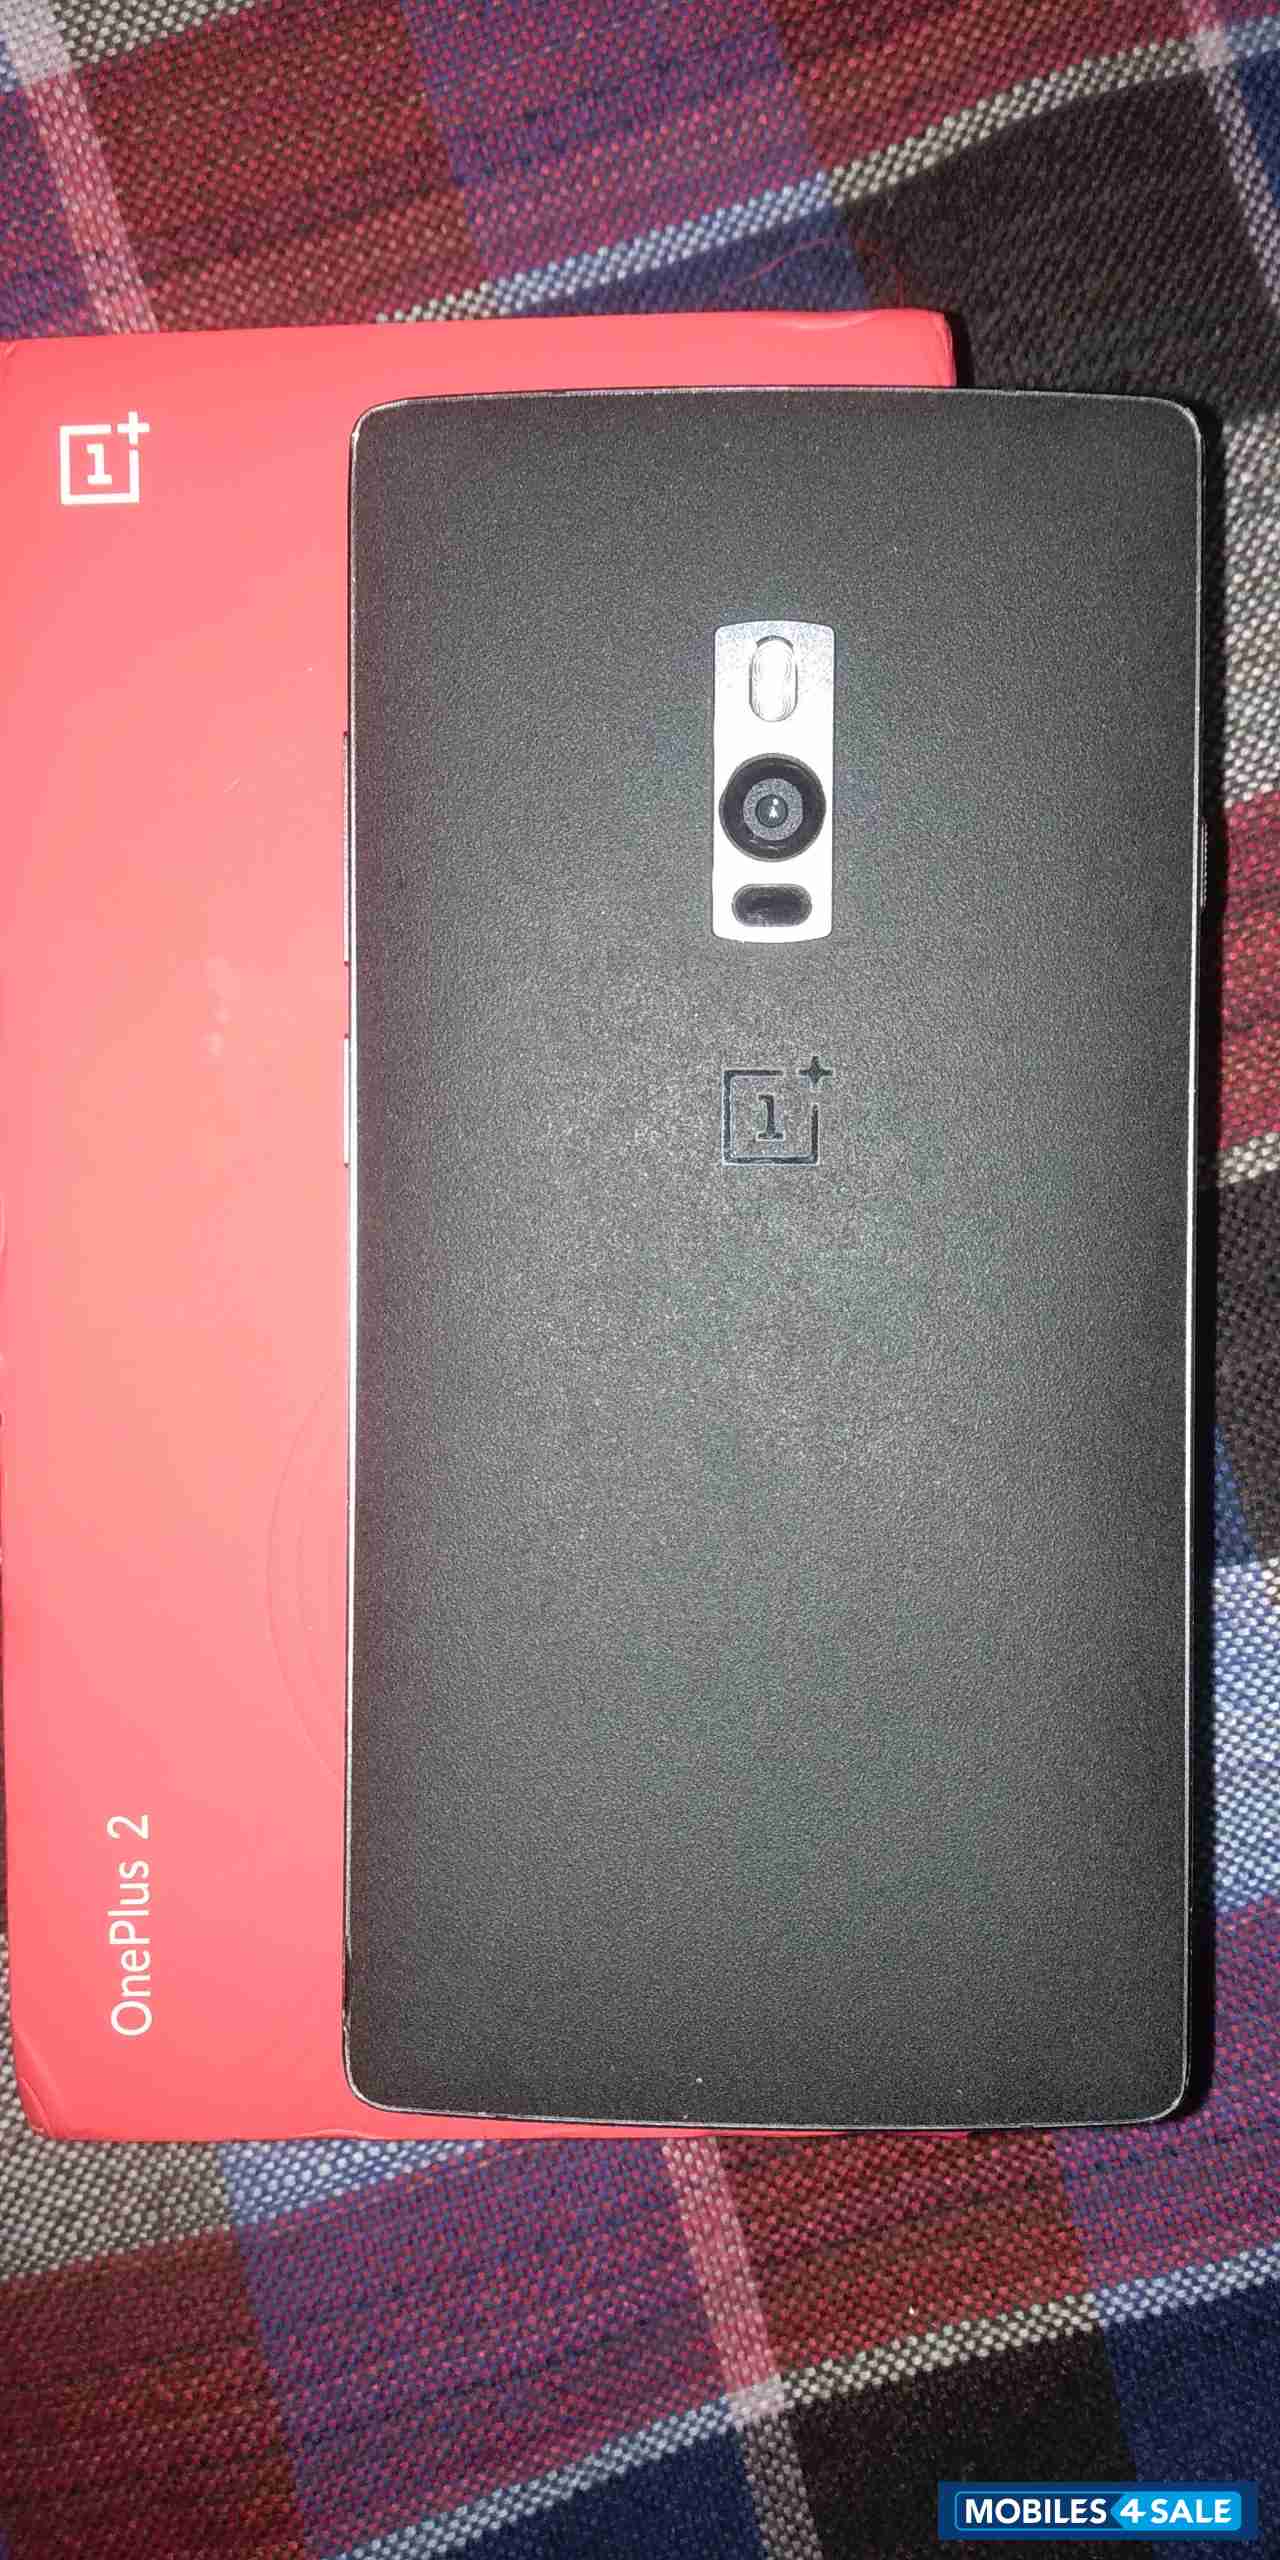 Black OnePlus Two